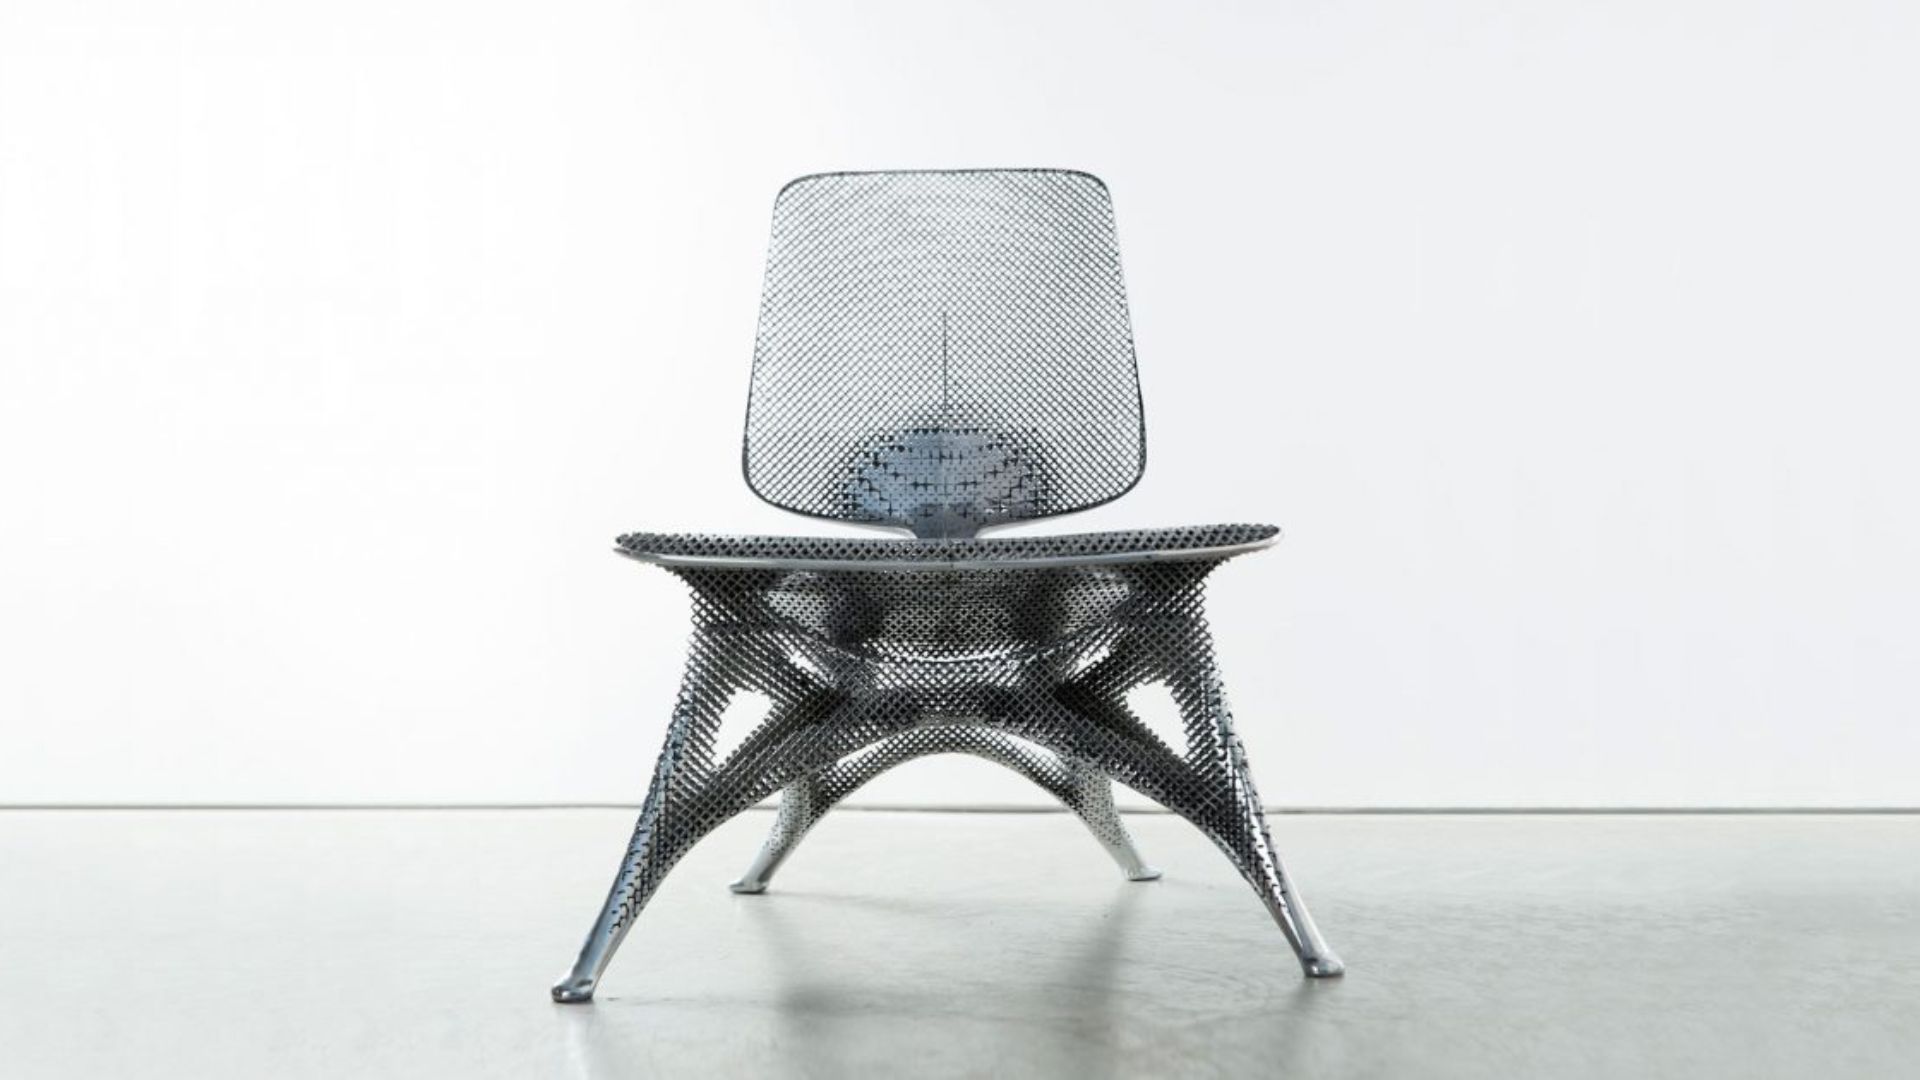 Aluminum Gradient Chair by Joris Laarman - cover